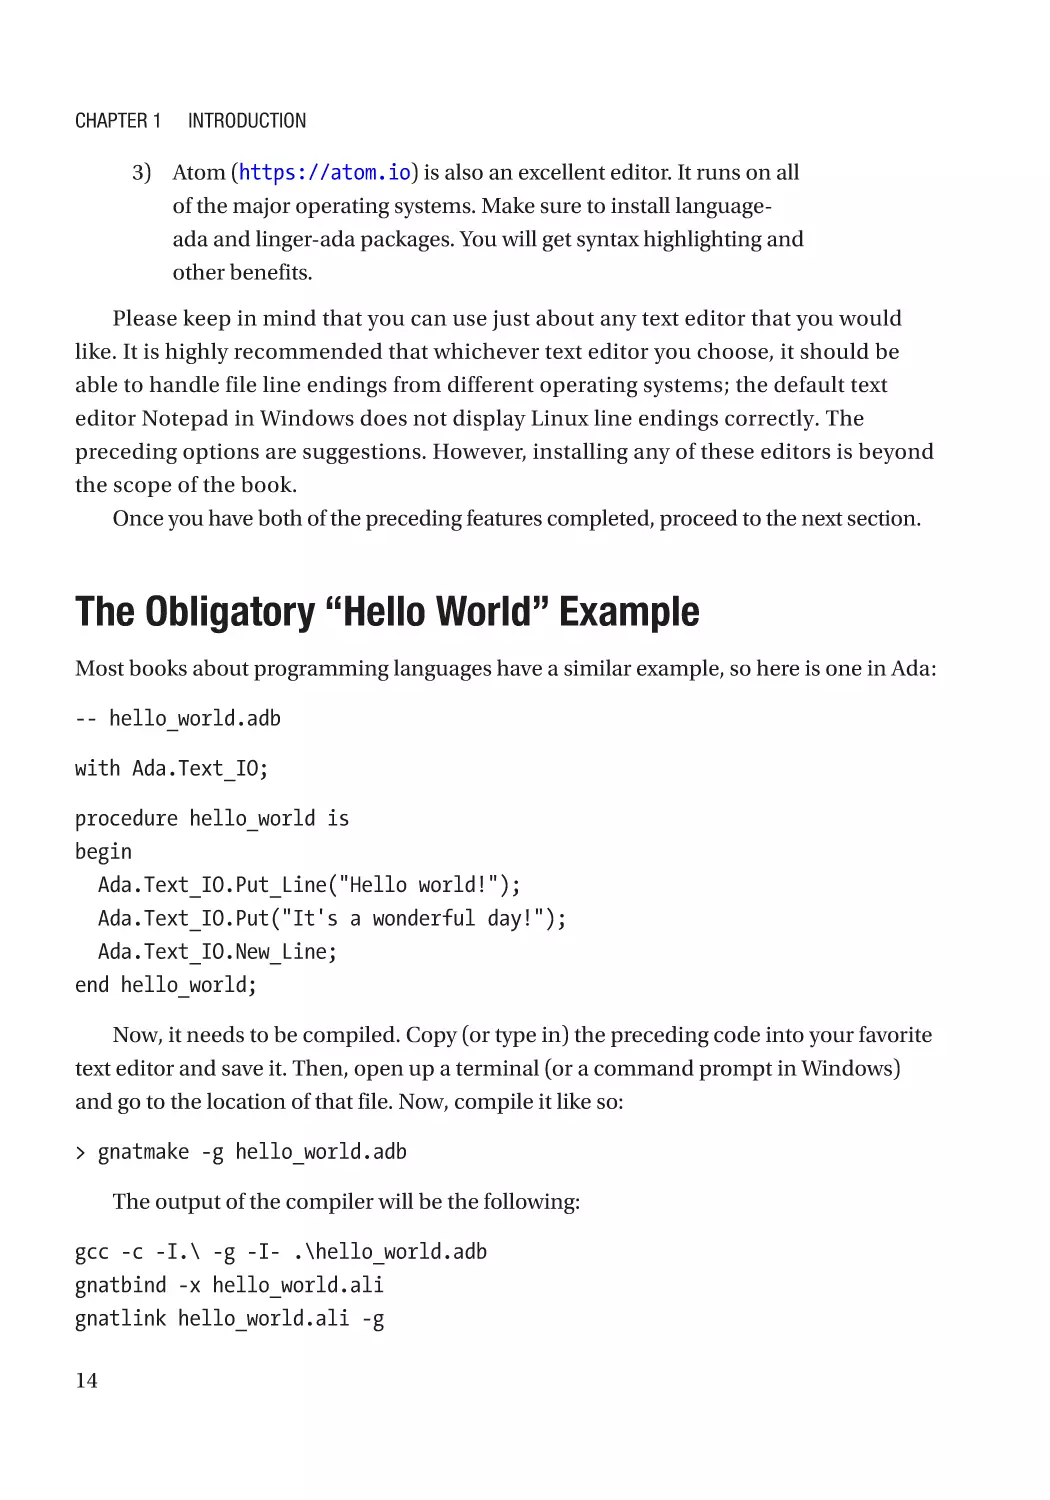 The Obligatory “Hello World” Example